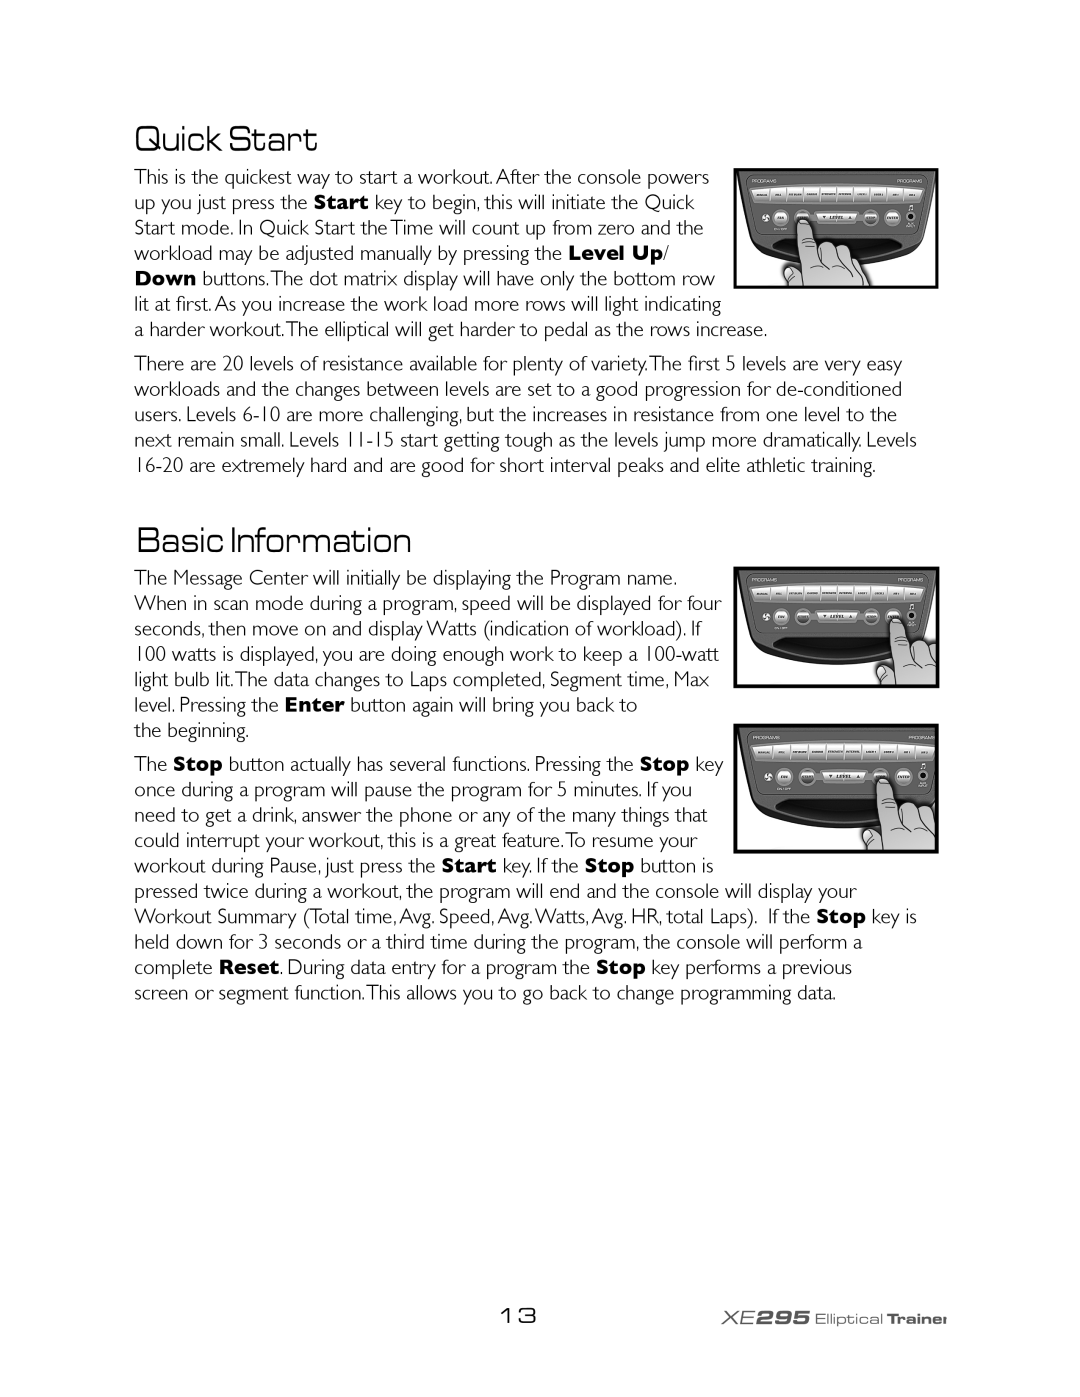 Spirit XE295 owner manual Quick Start, Basic Information 